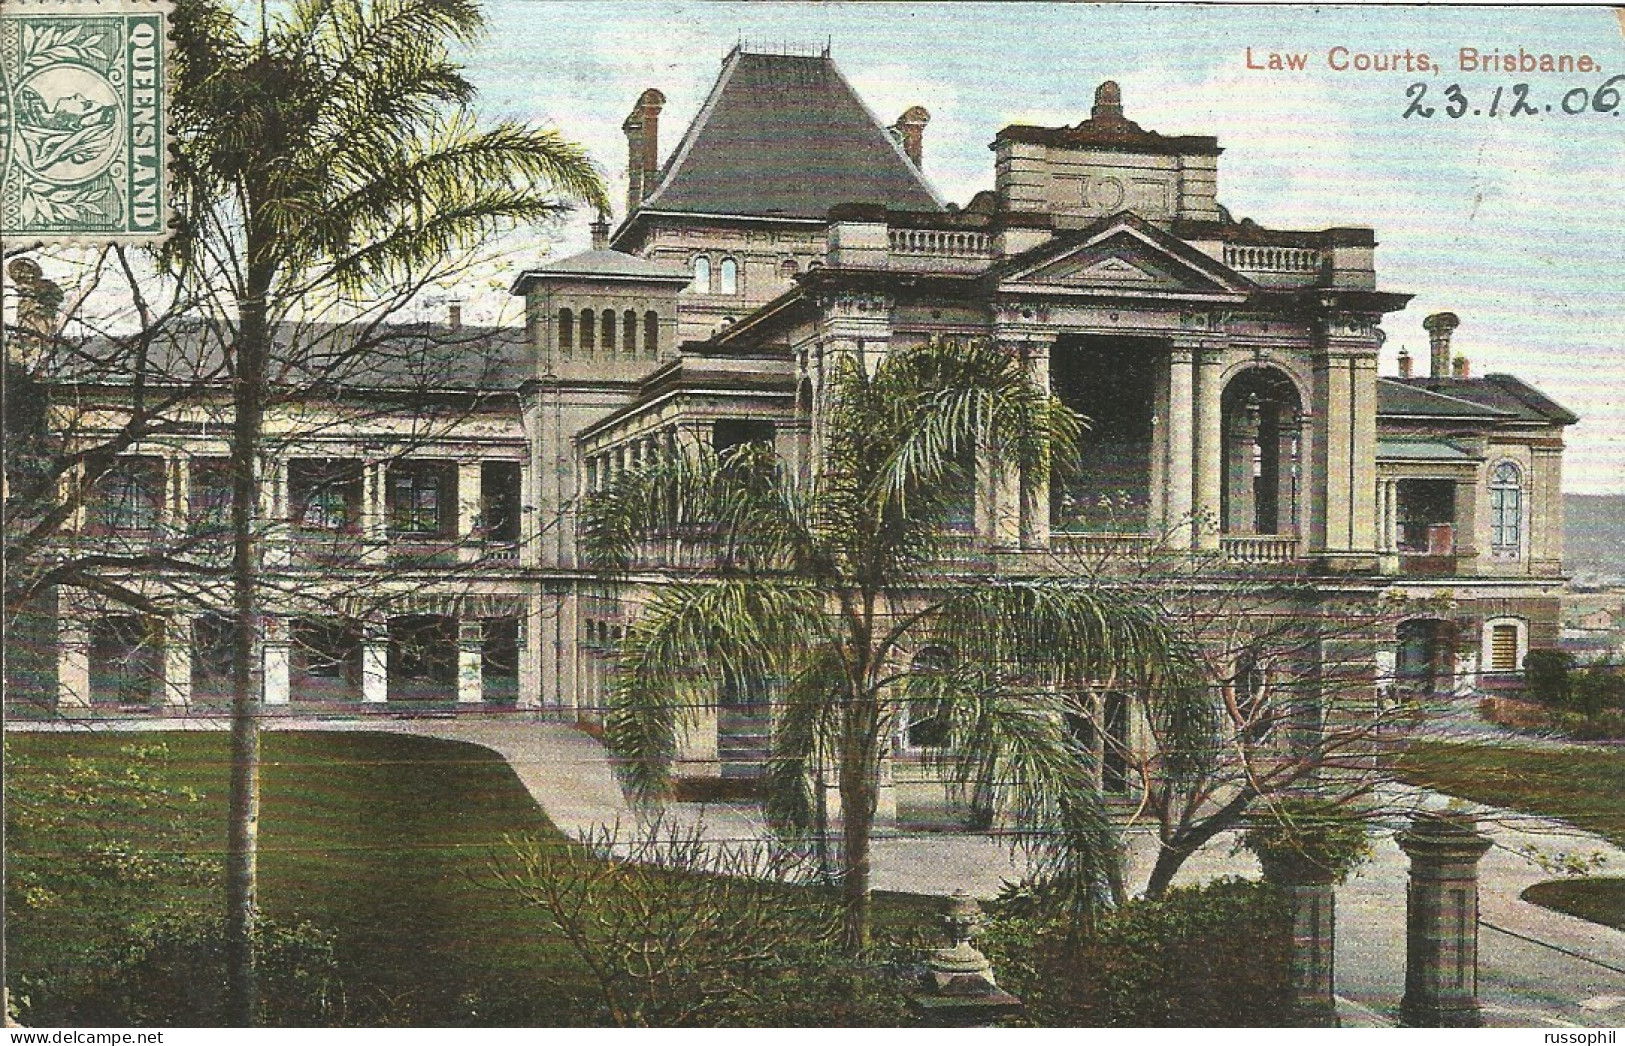 AUSTRALIA - QLD - LAW COURTS, BRISBANE - COLOURED SHELL SERIES, QUEENSLAND VIEWS - 1906 - Brisbane